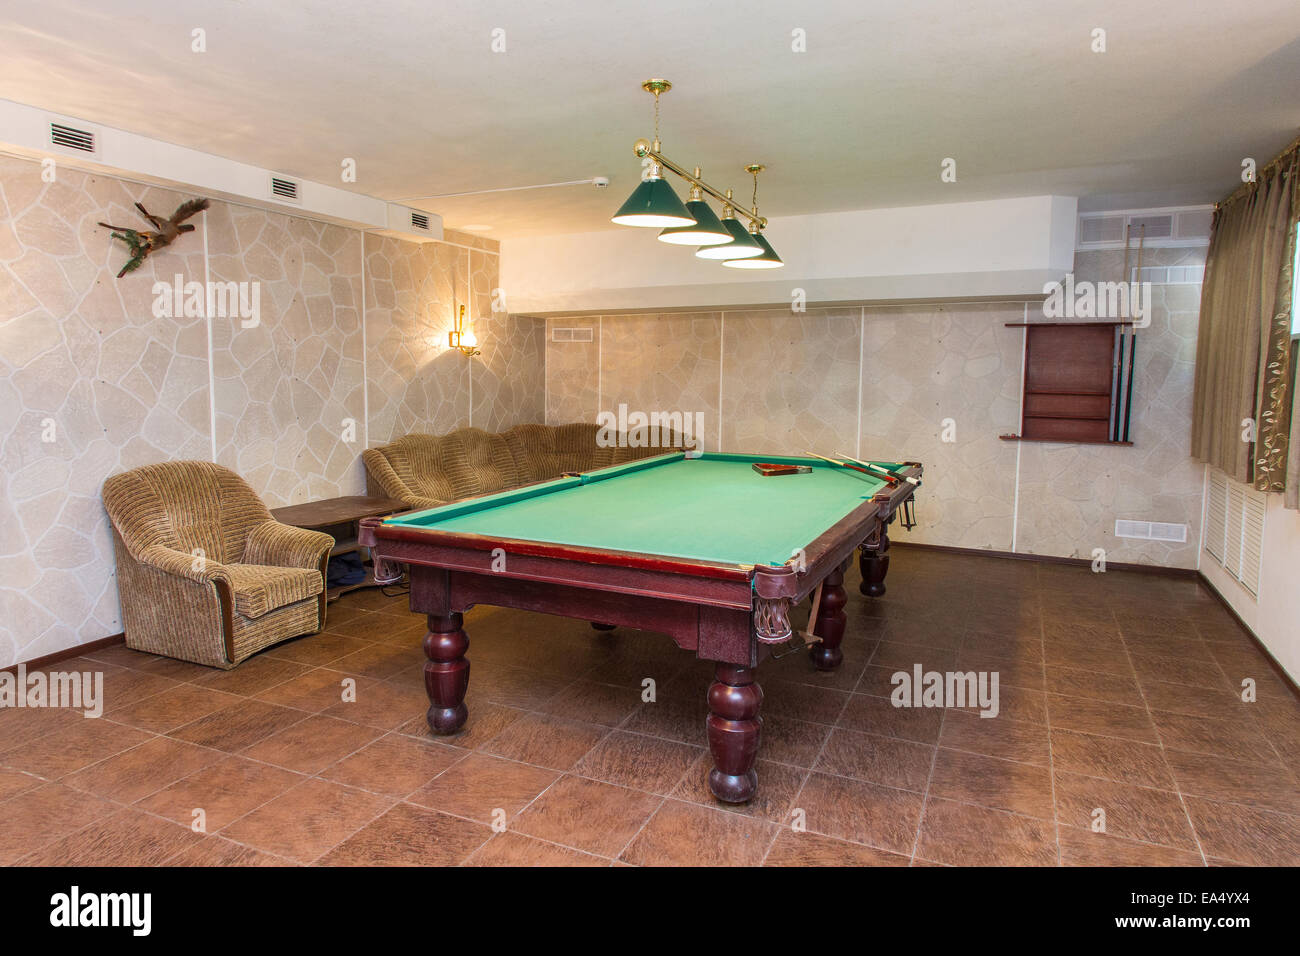 Billiard table Stock Photo